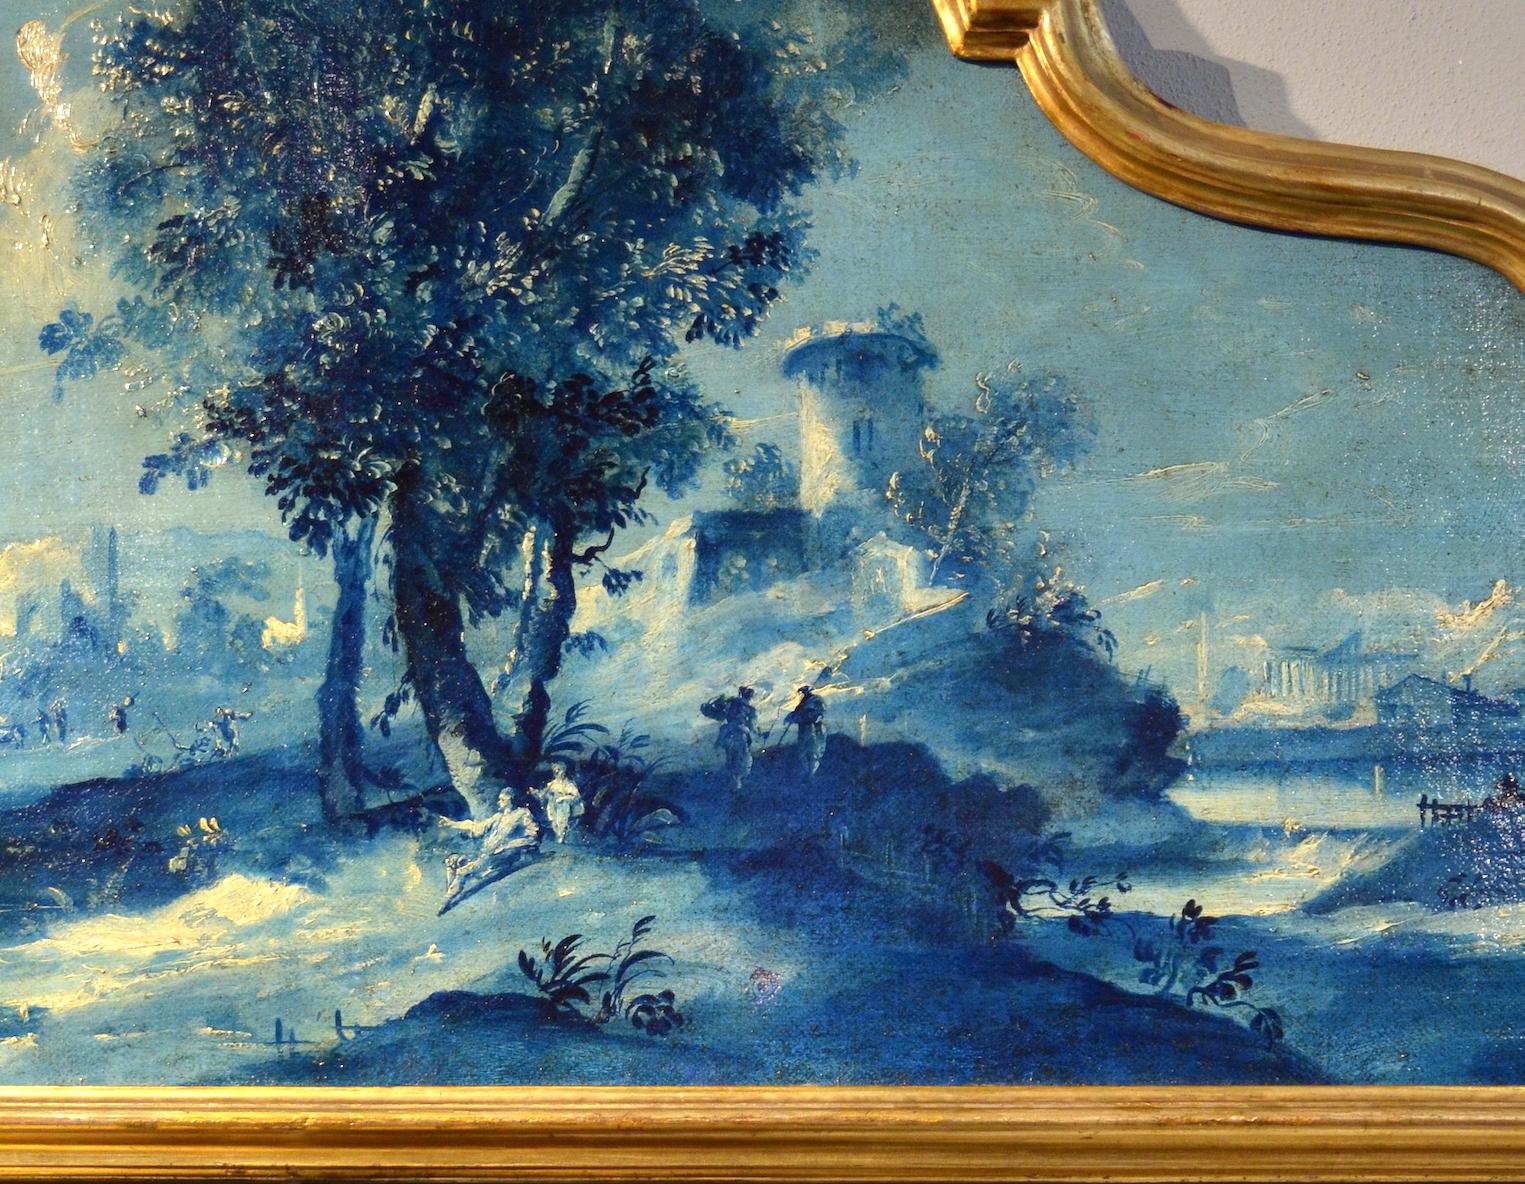 Paint Oil on canvas Pair Landscape Wood See Lake Venezia Italy Baroque Ricci Art 6